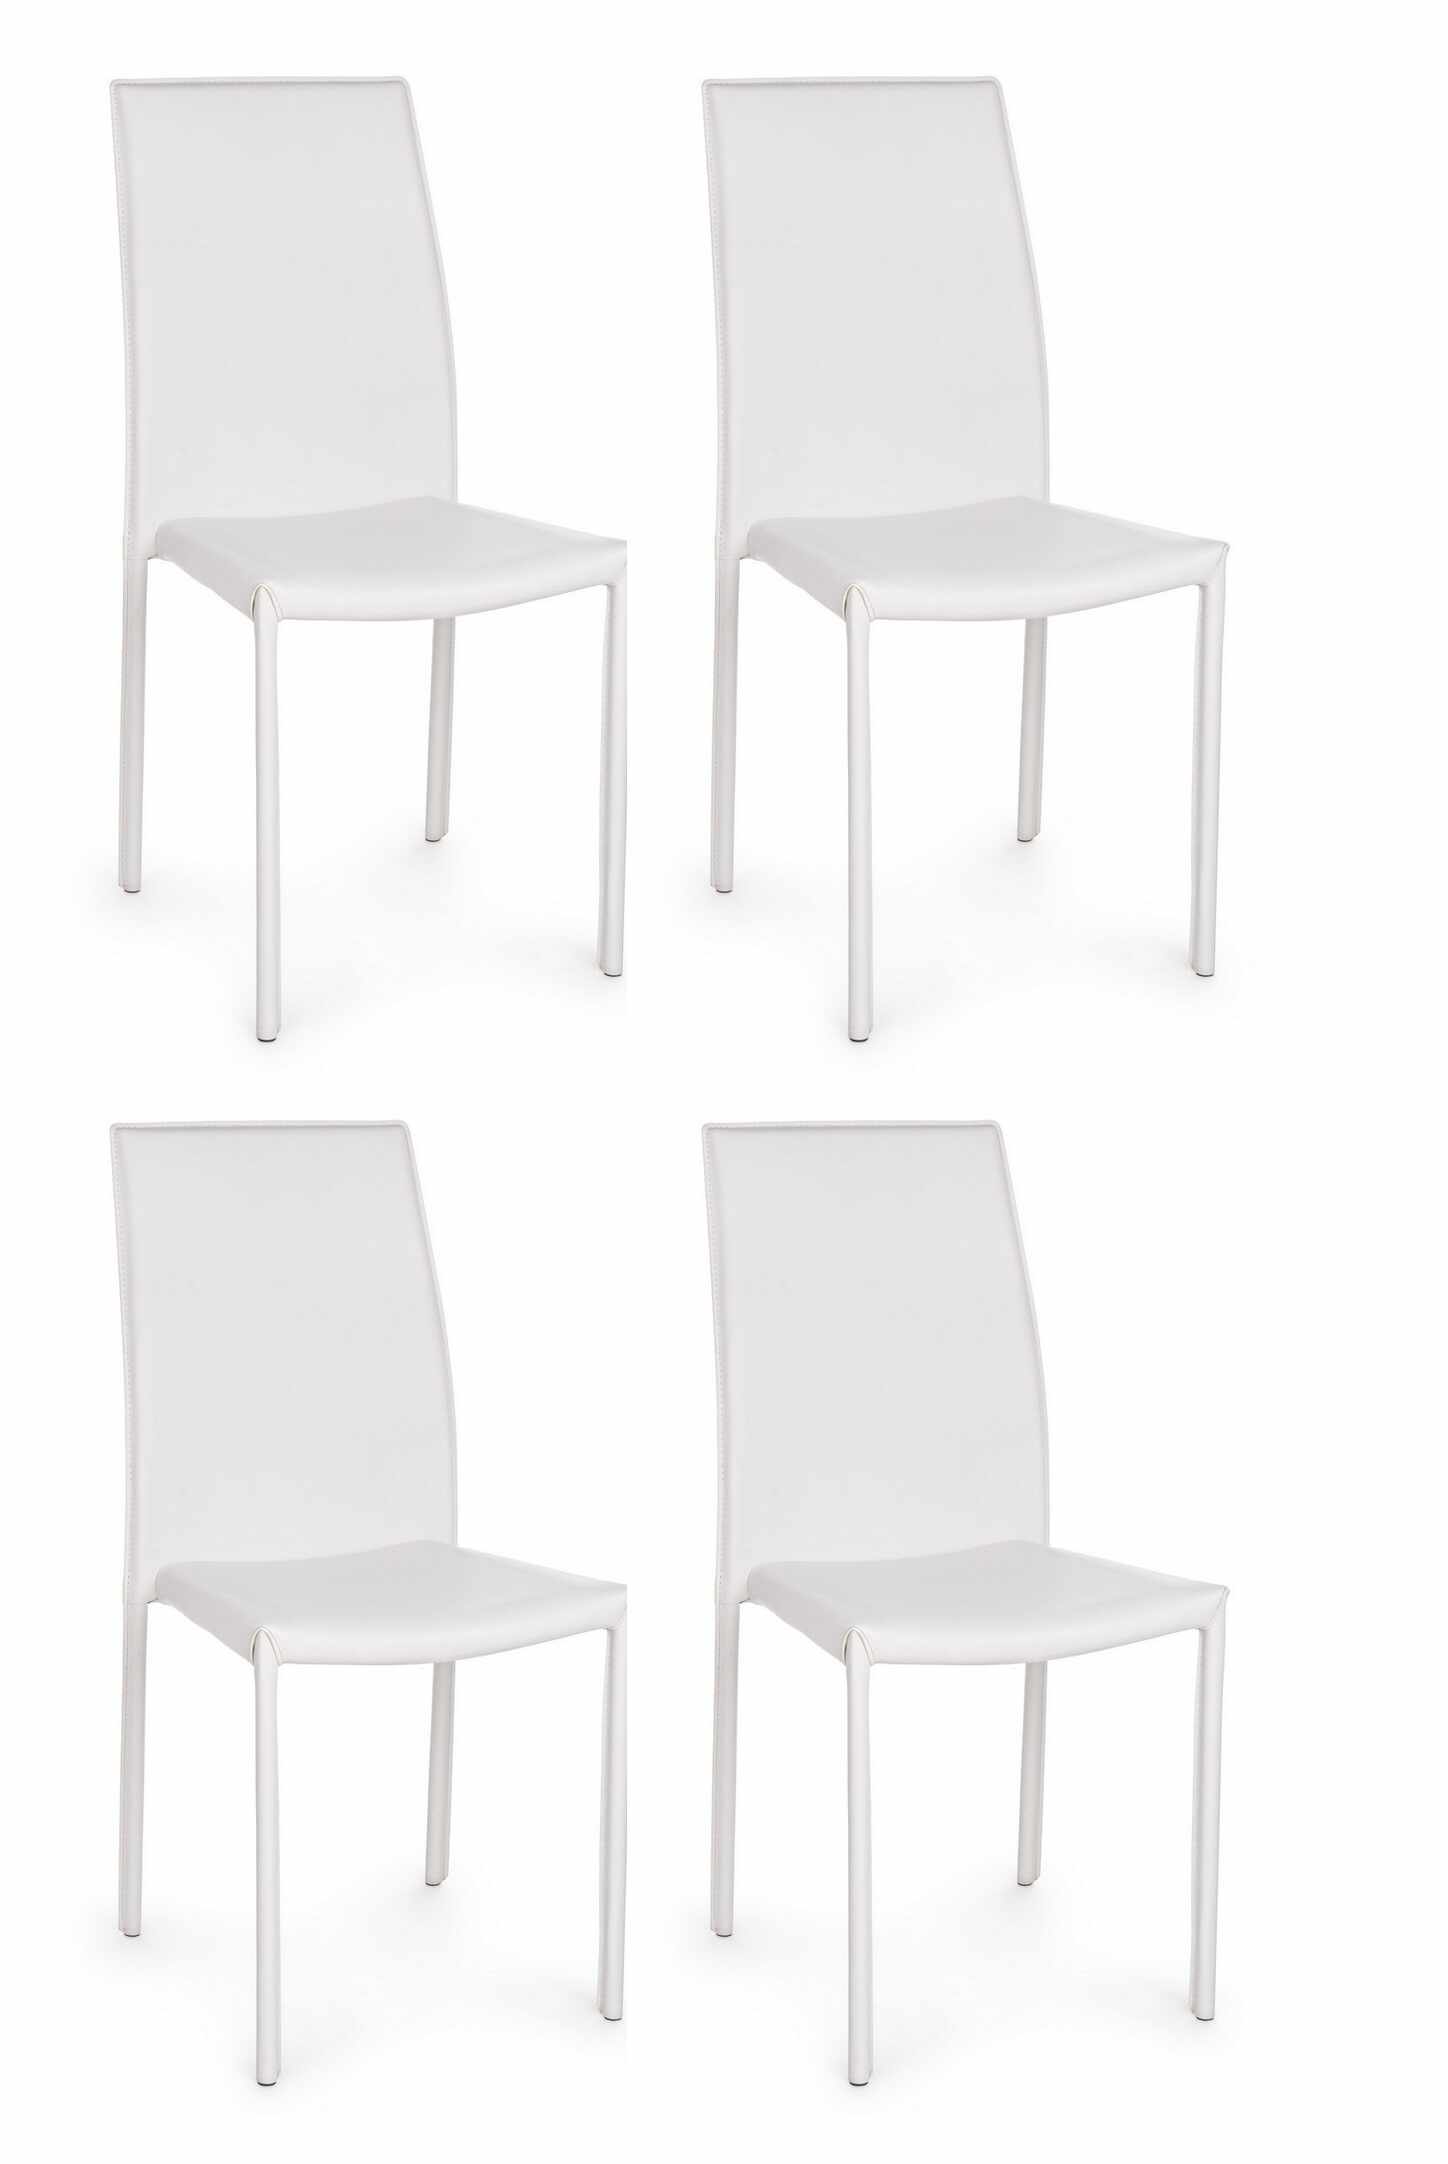 Set 4 scaune tapitate cu piele ecologica si picioare metalice Adda Alb, l44xA42xH96 cm